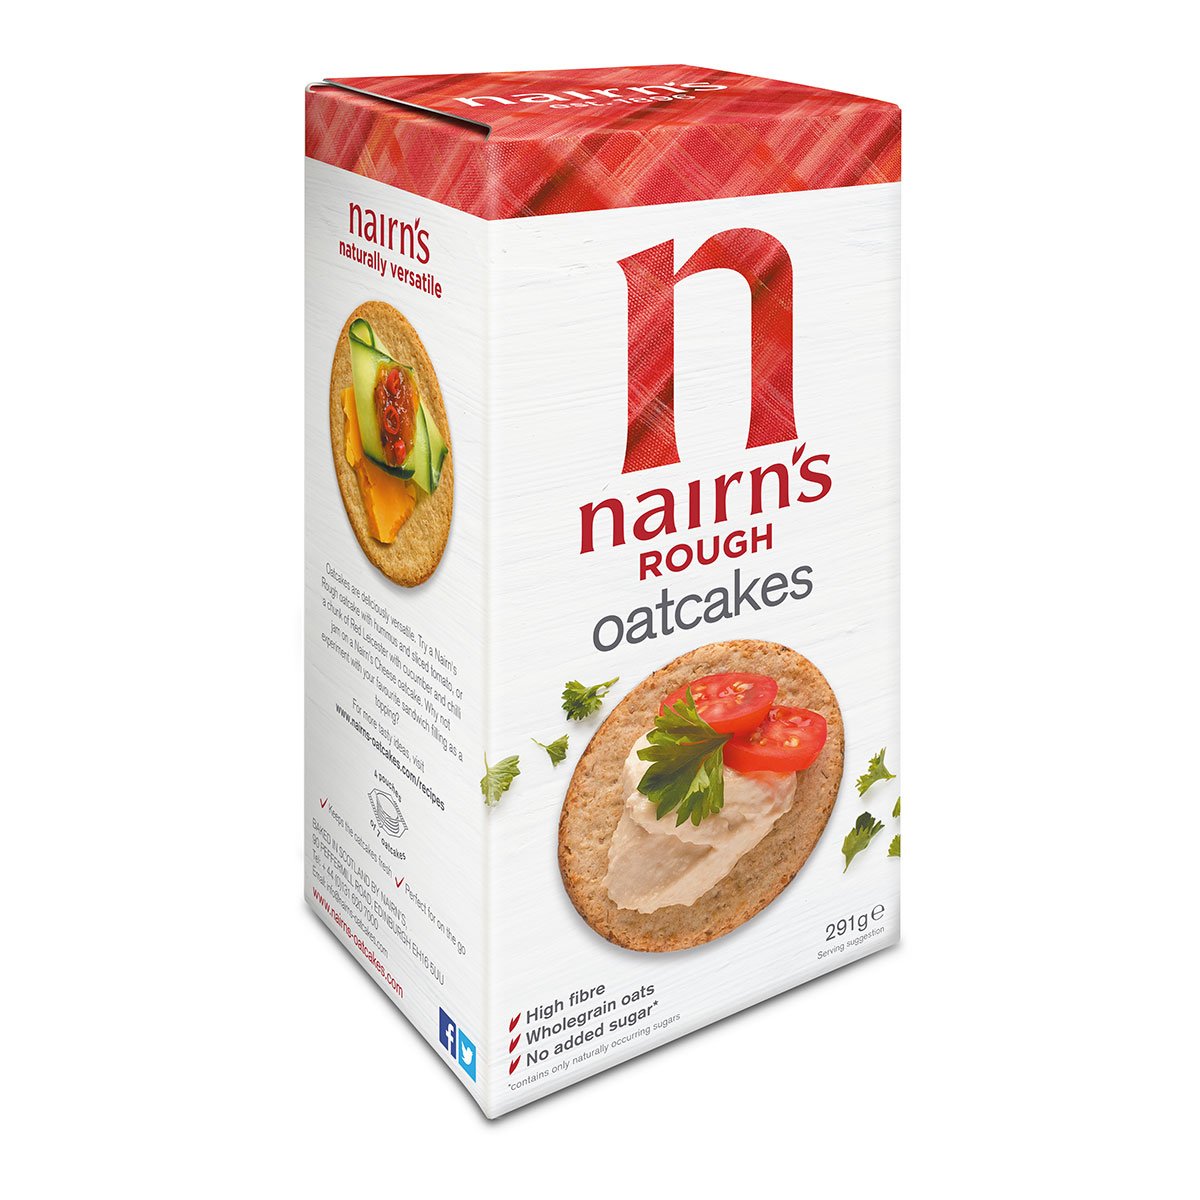 Nairns Rough Oatcakes 291g - Just Natural